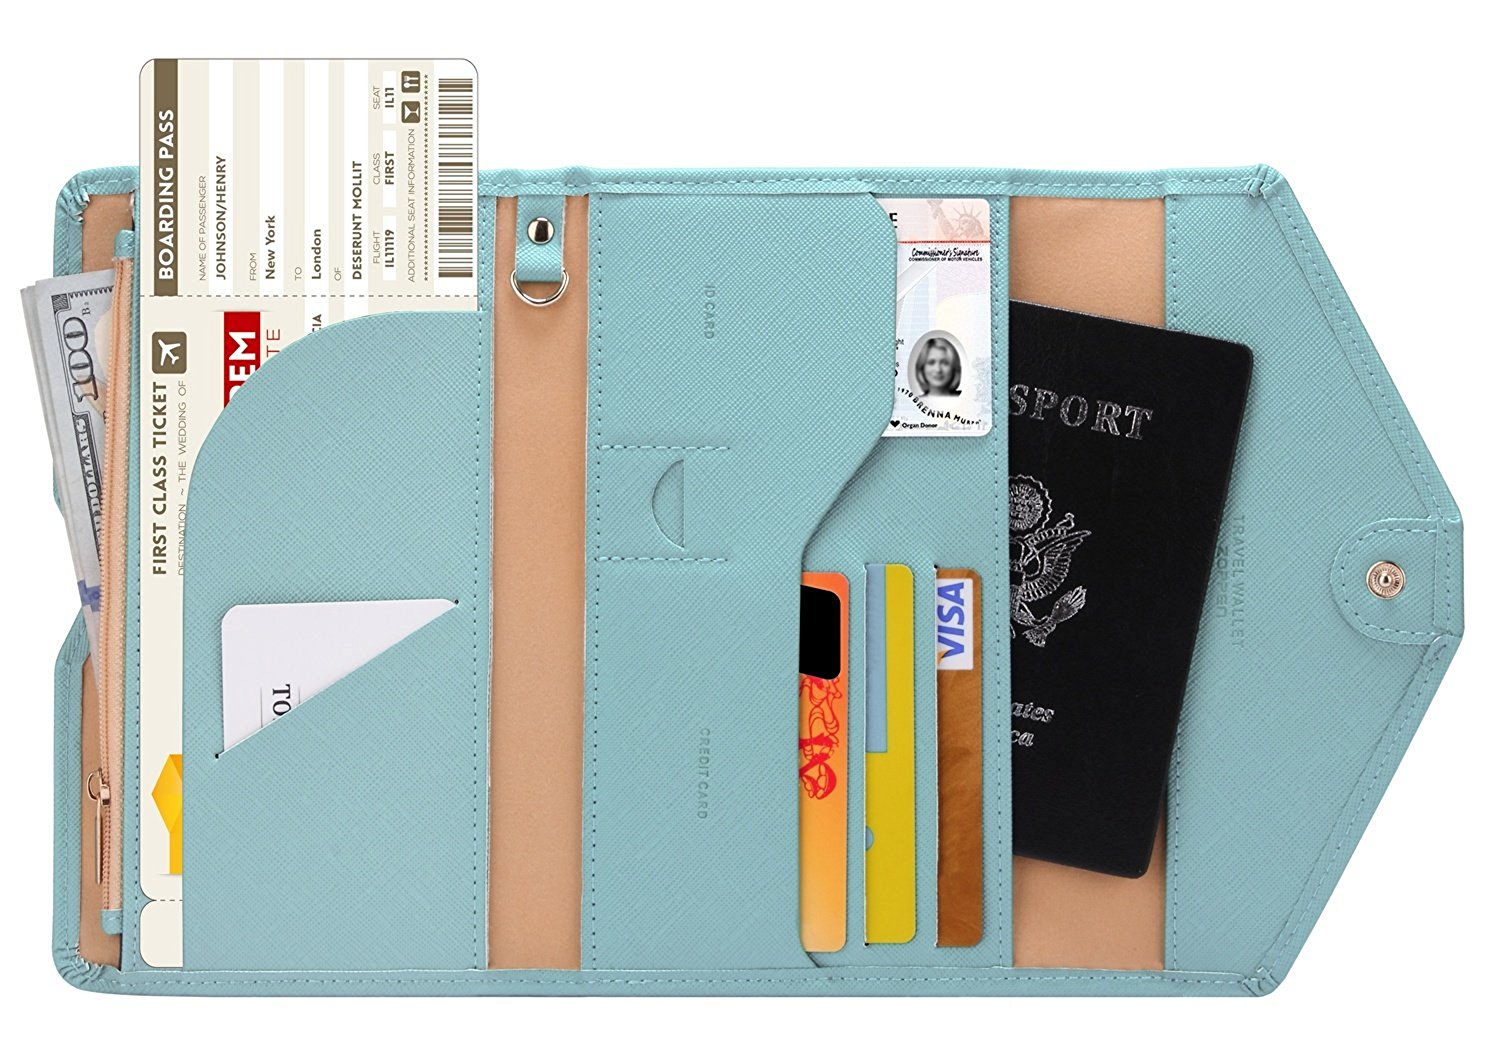 Ver.4 Zoppen Multi-purpose Rfid Blocking Travel Passport Wallet Tri-fold Document Organizer Holder 